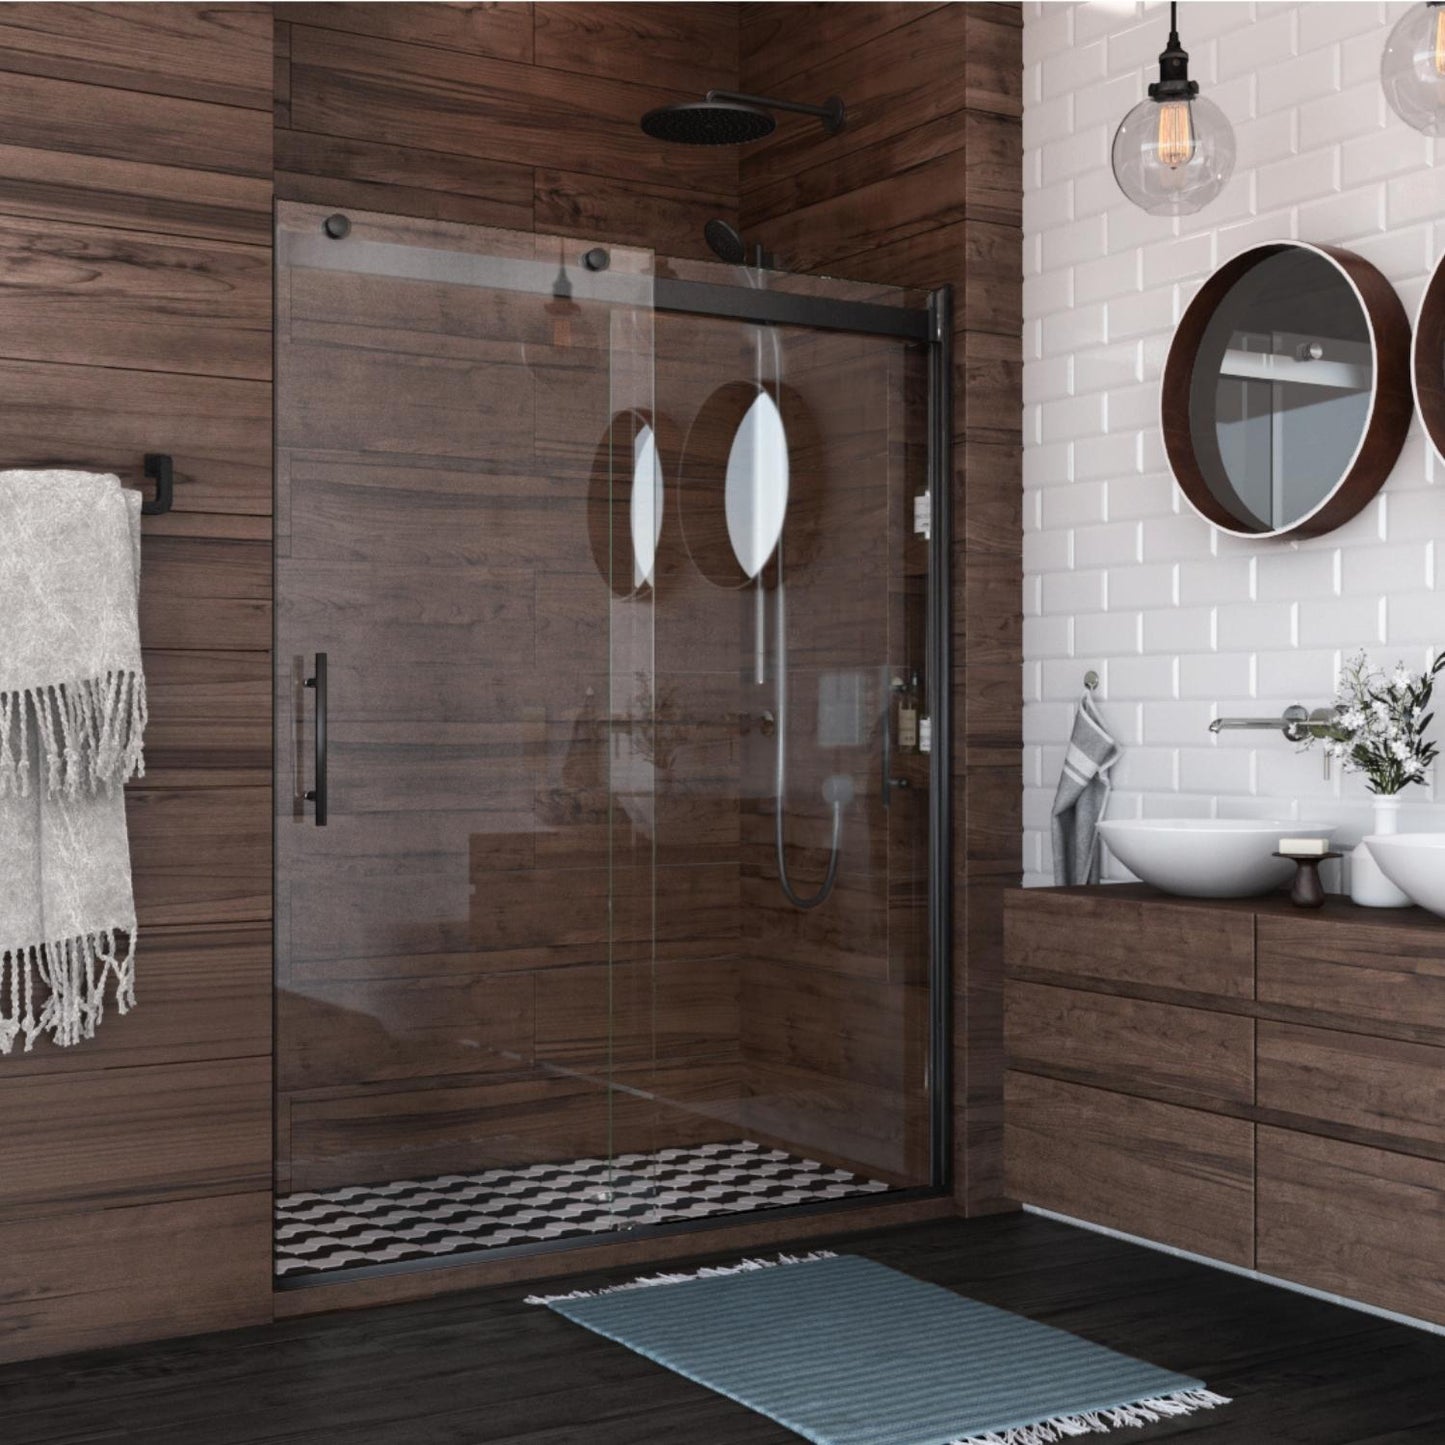 Shower enclosure  Bathroom interior design, Bathroom interior, Frameless  shower enclosures